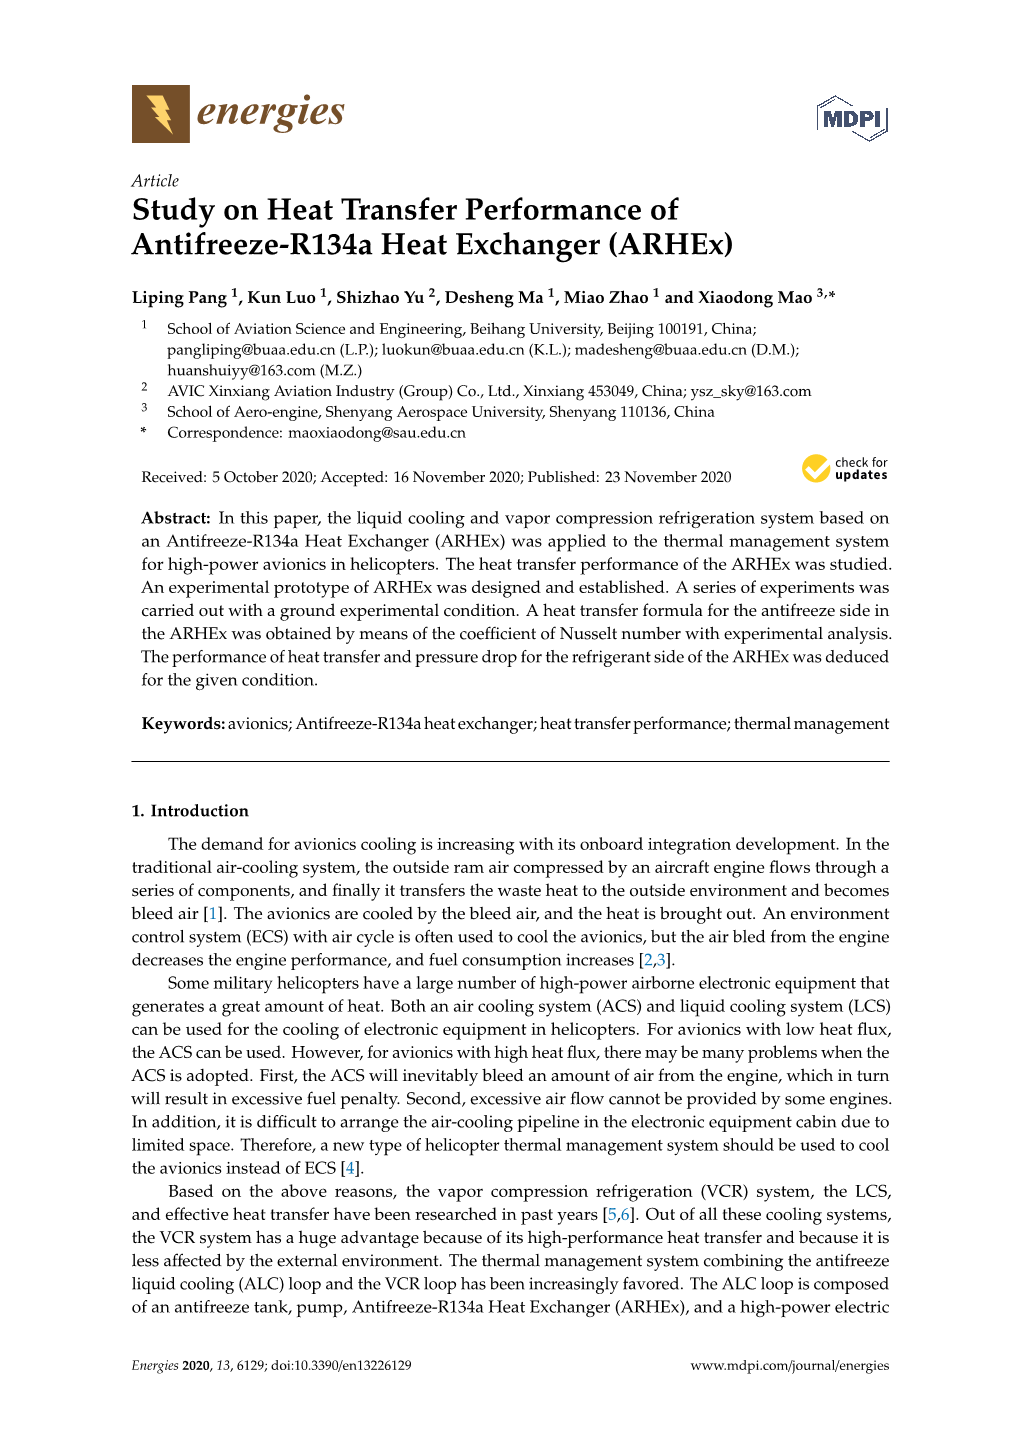 Study on Heat Transfer Performance of Antifreeze-R134a Heat Exchanger (Arhex)